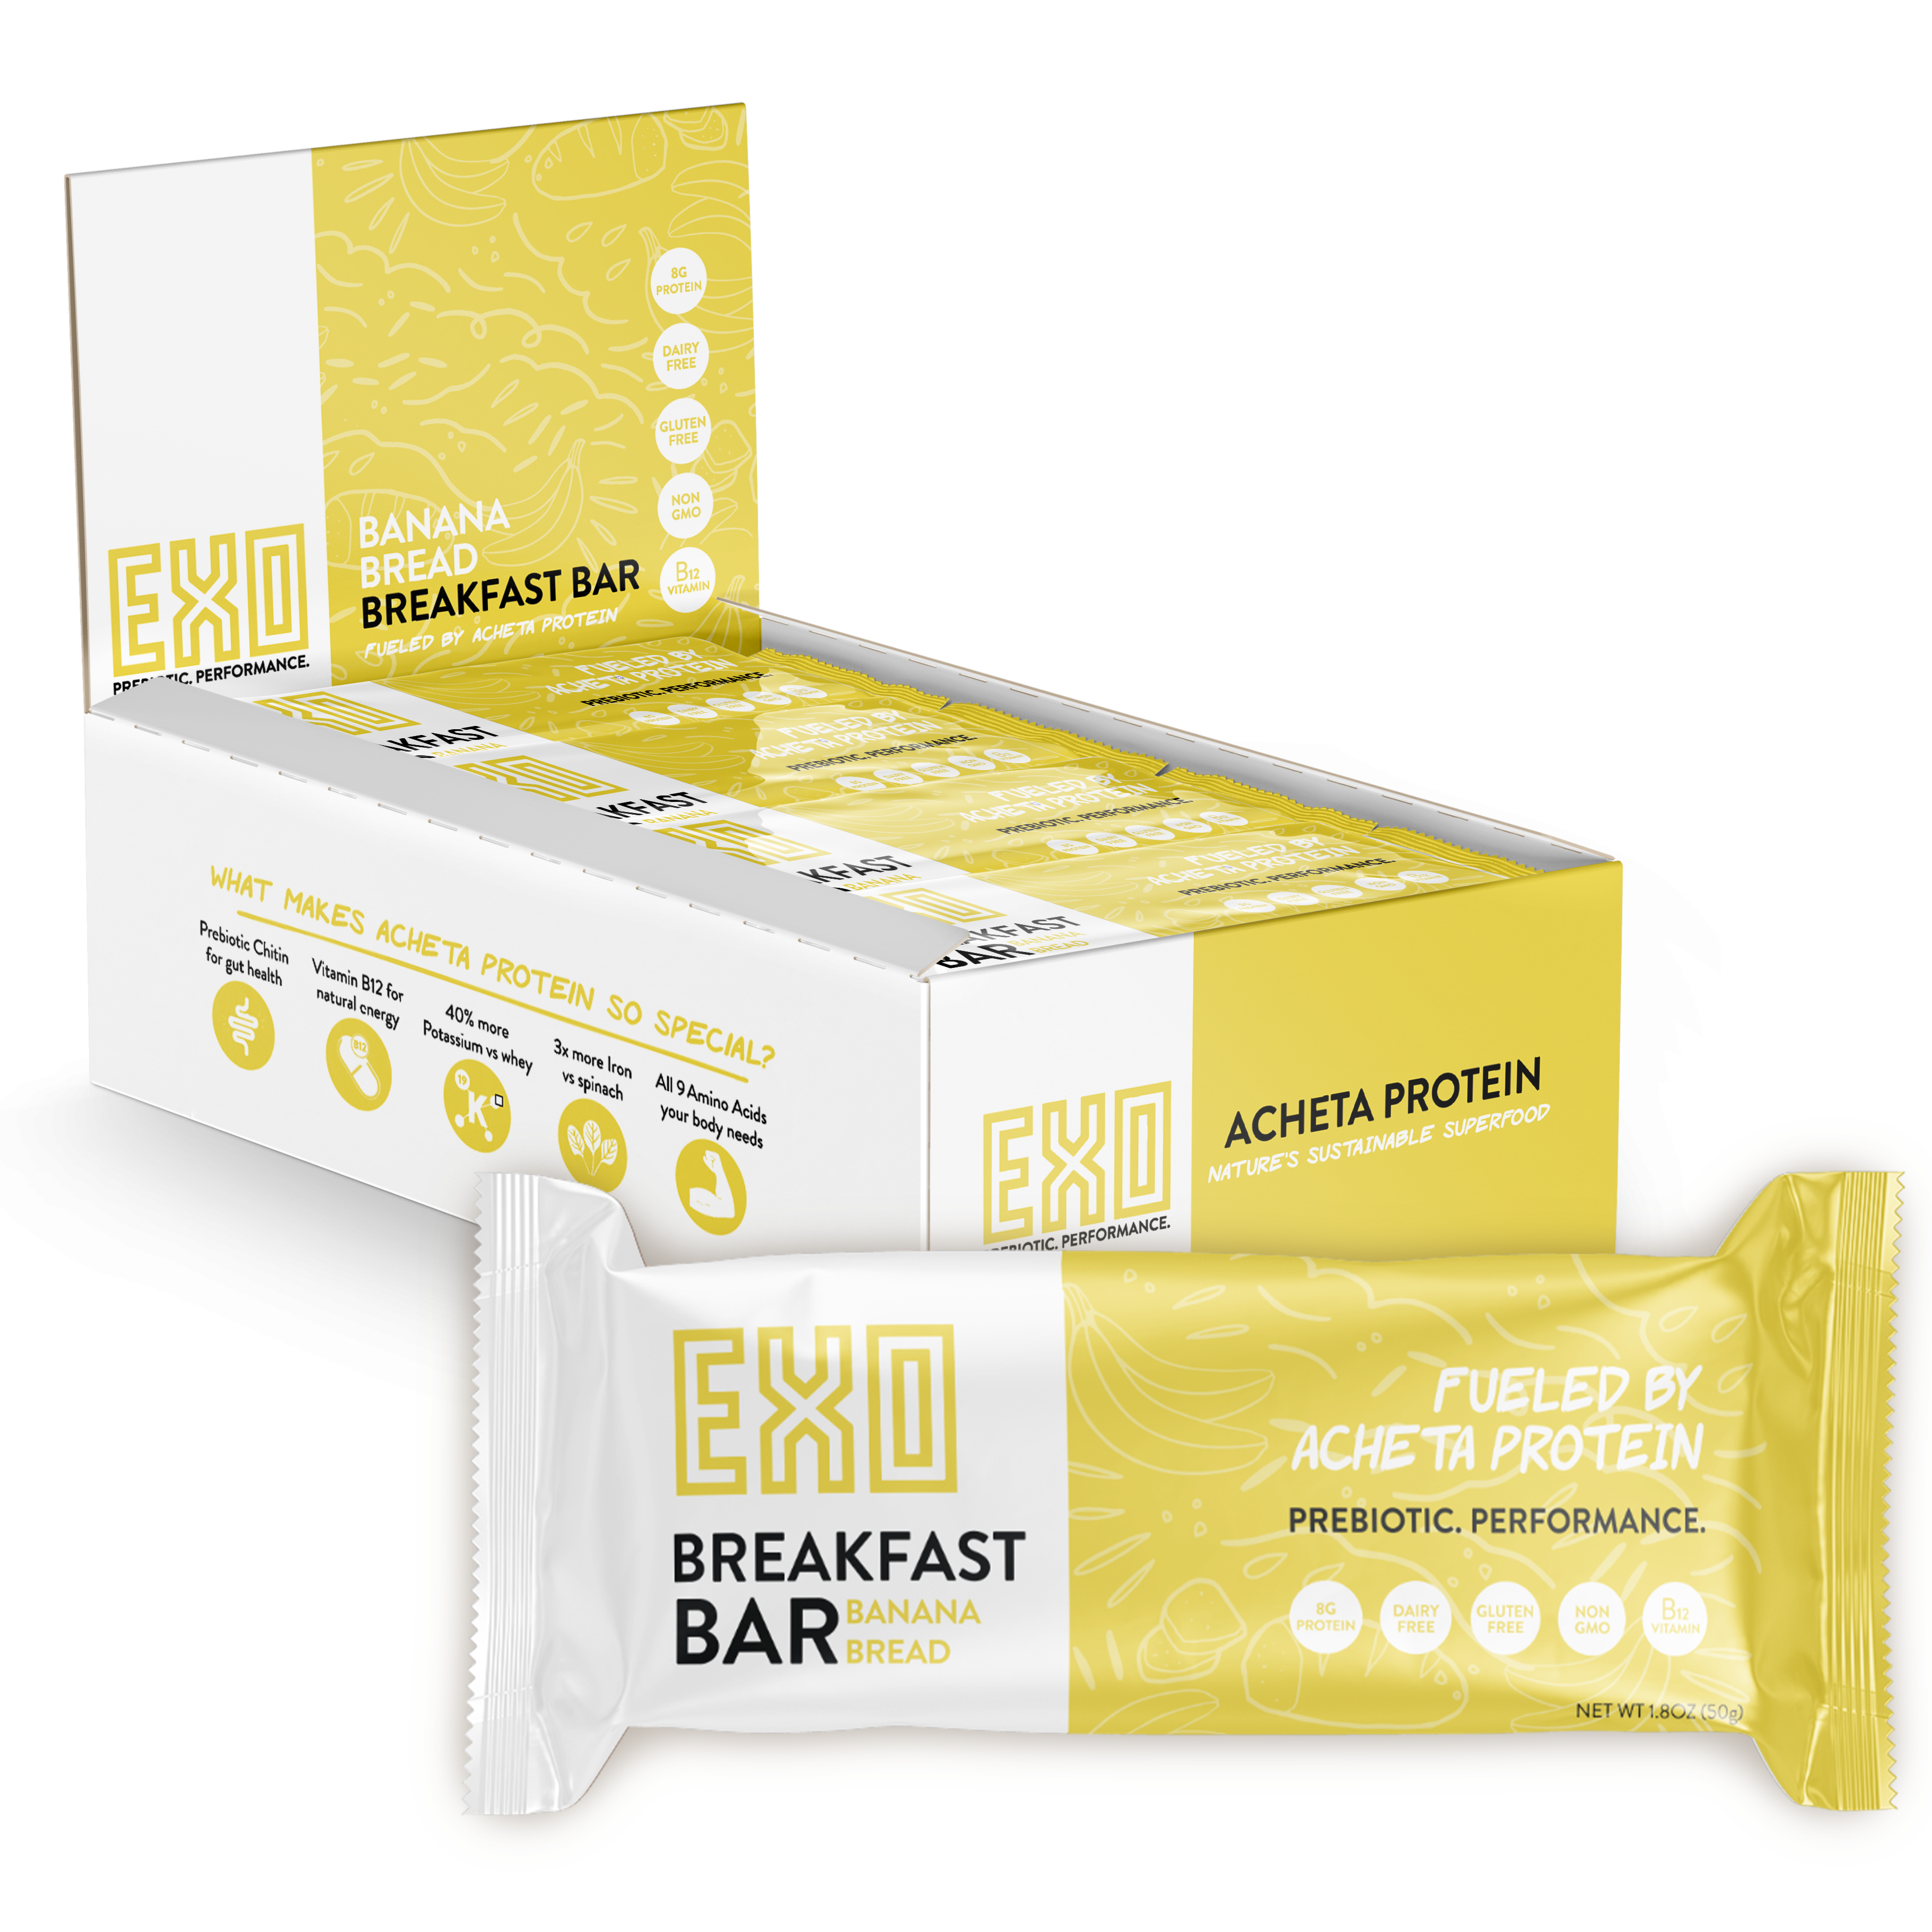 Banana Bread Breakfast Bars | Acheta Protein | EXO - EXO Protein